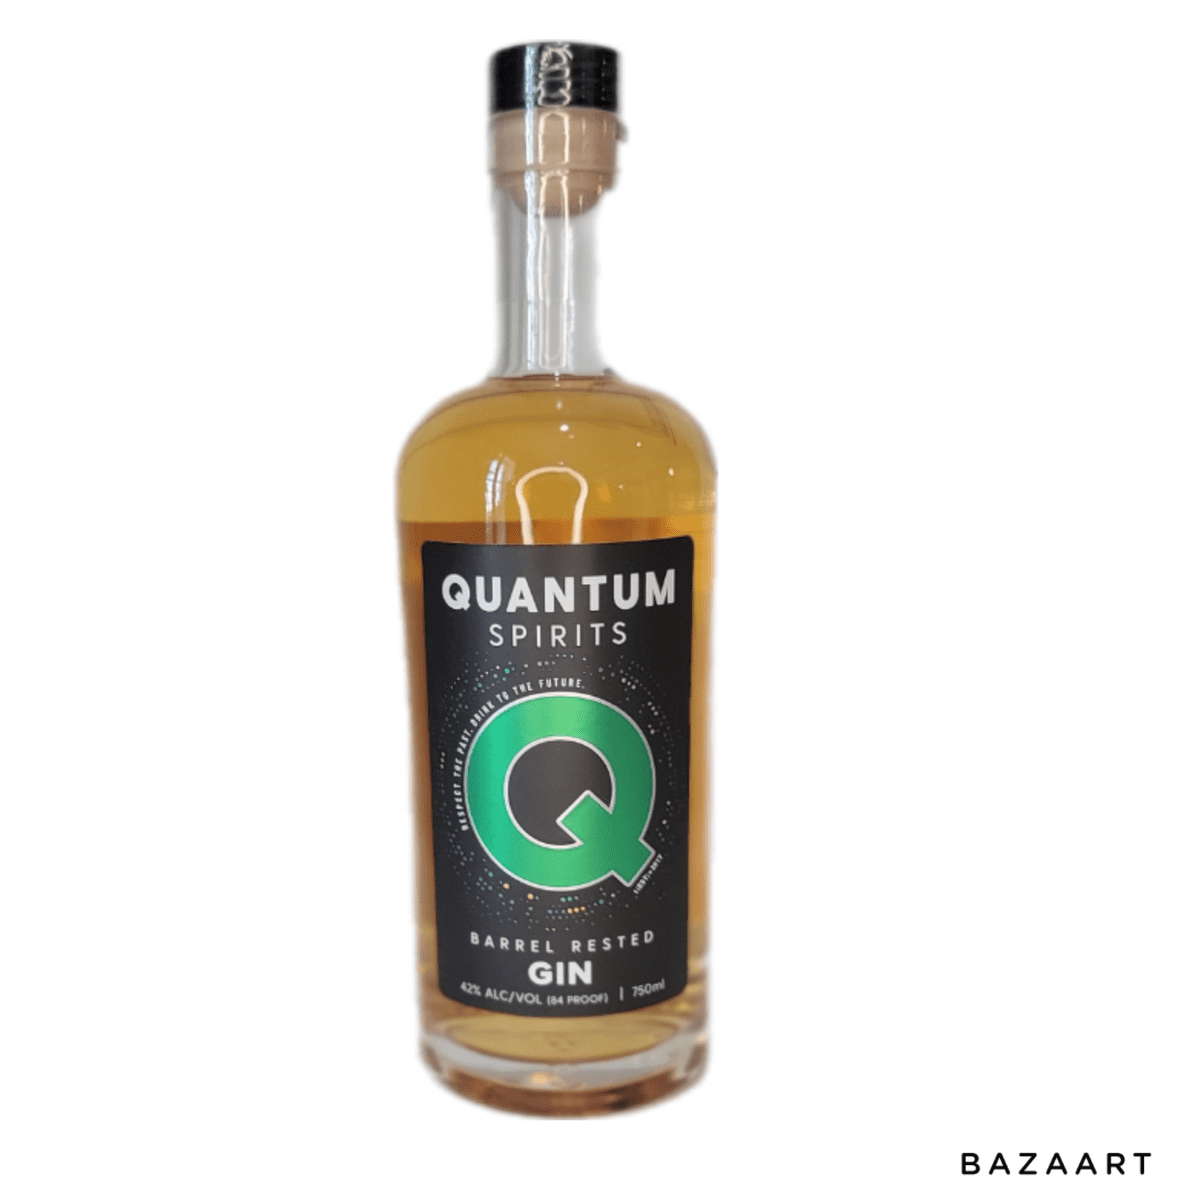 Quantum Spirits - Barrel Rested Gin - 750mL Bottle